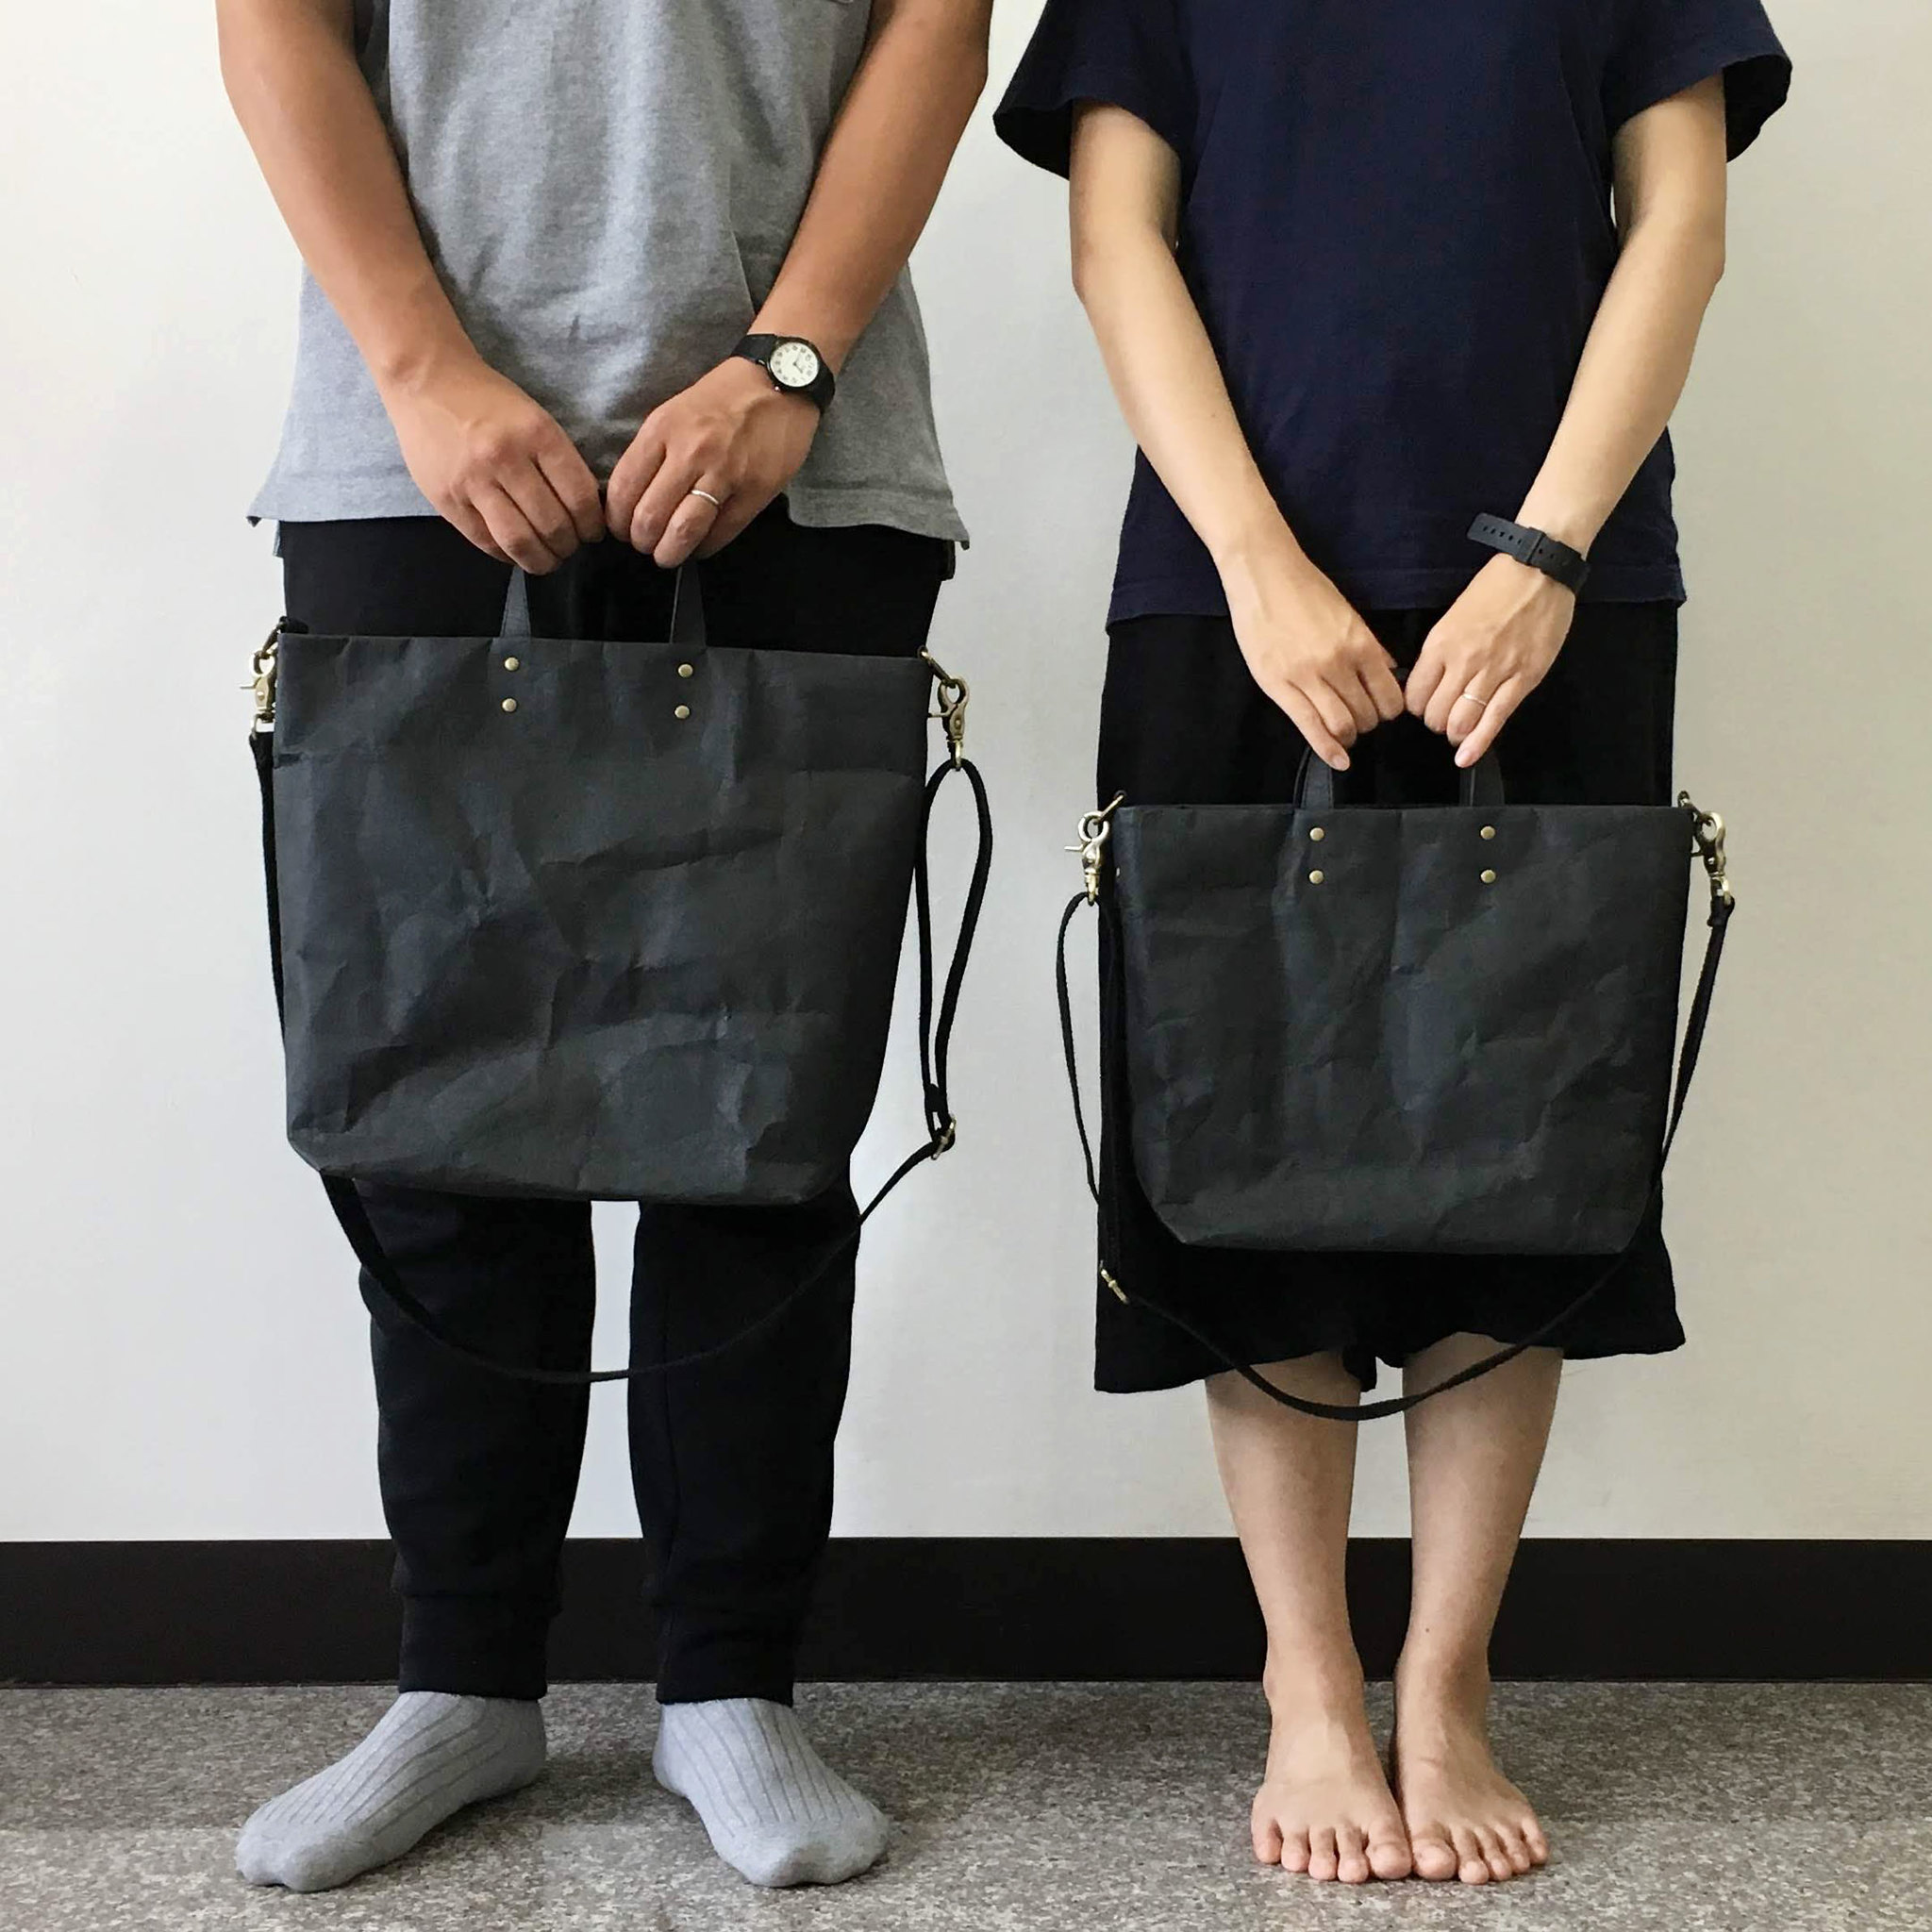 Washable paper black tote bag (commuter bag, briefcase, school bag